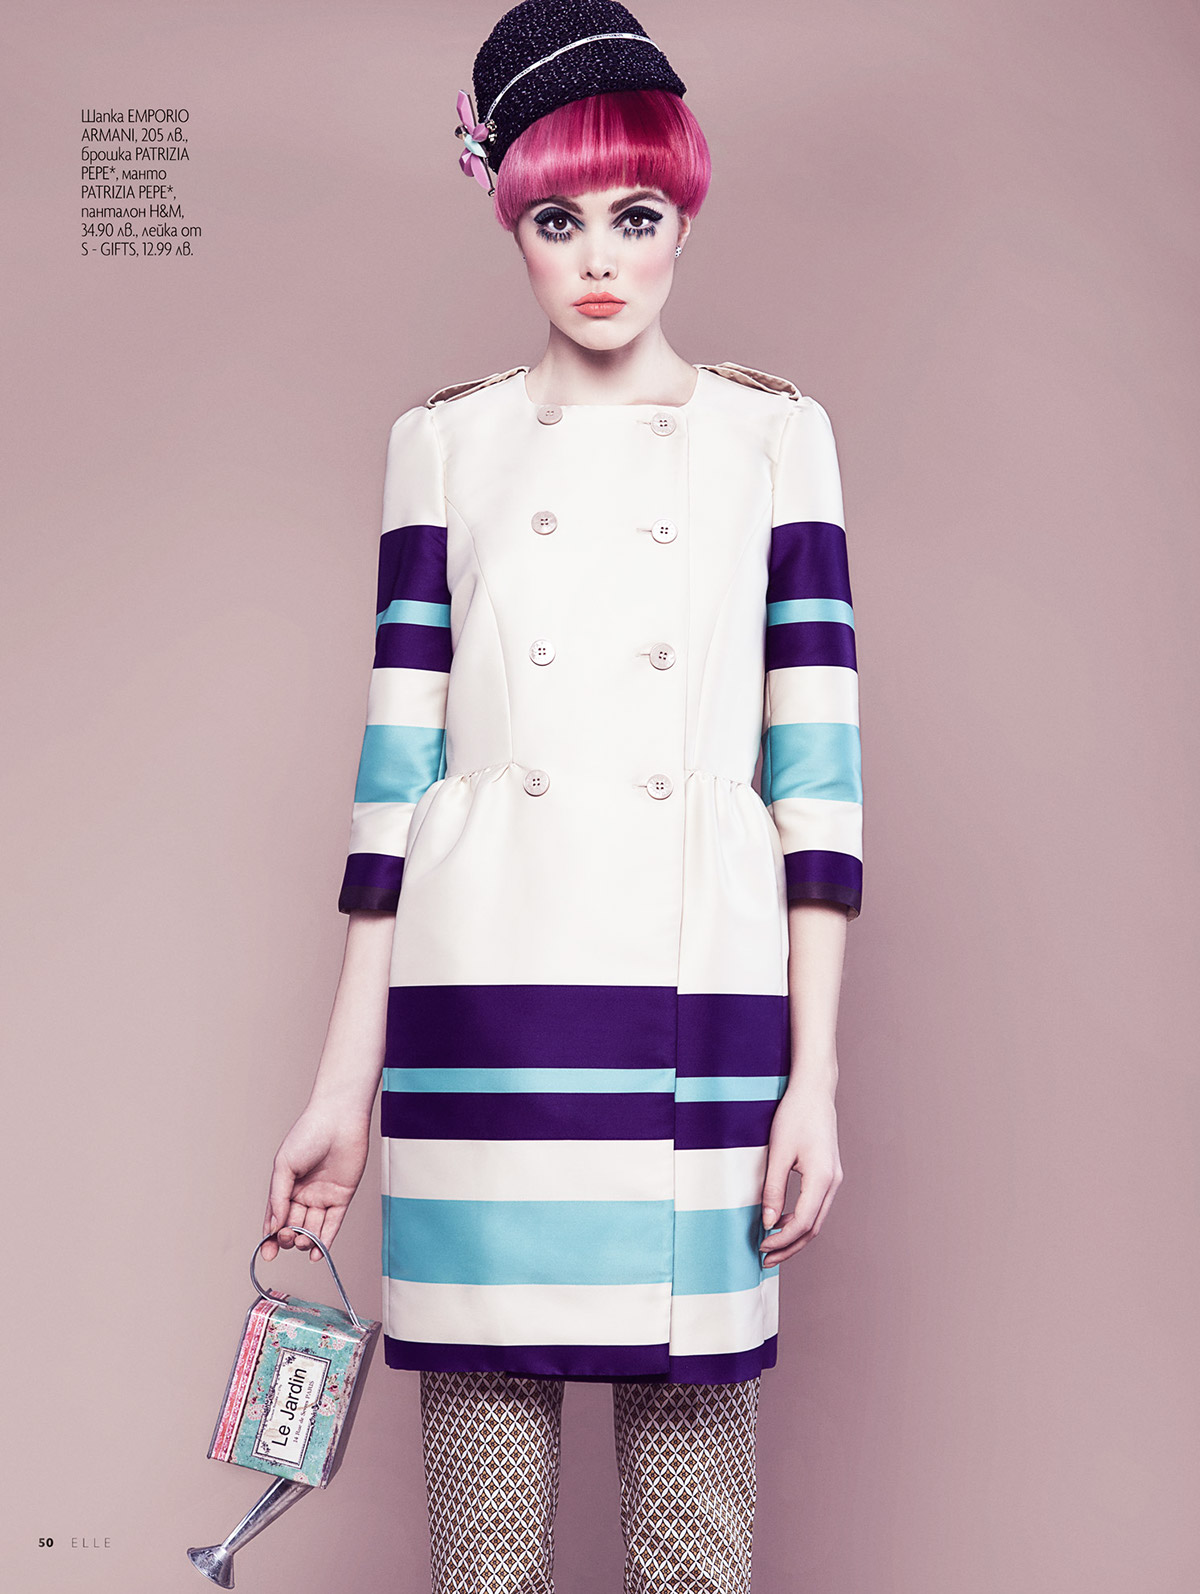 Elle magazine editorial sofia bulgaria pink twiggy styling  Andinov hair makeup 60's stripes polkadot wig